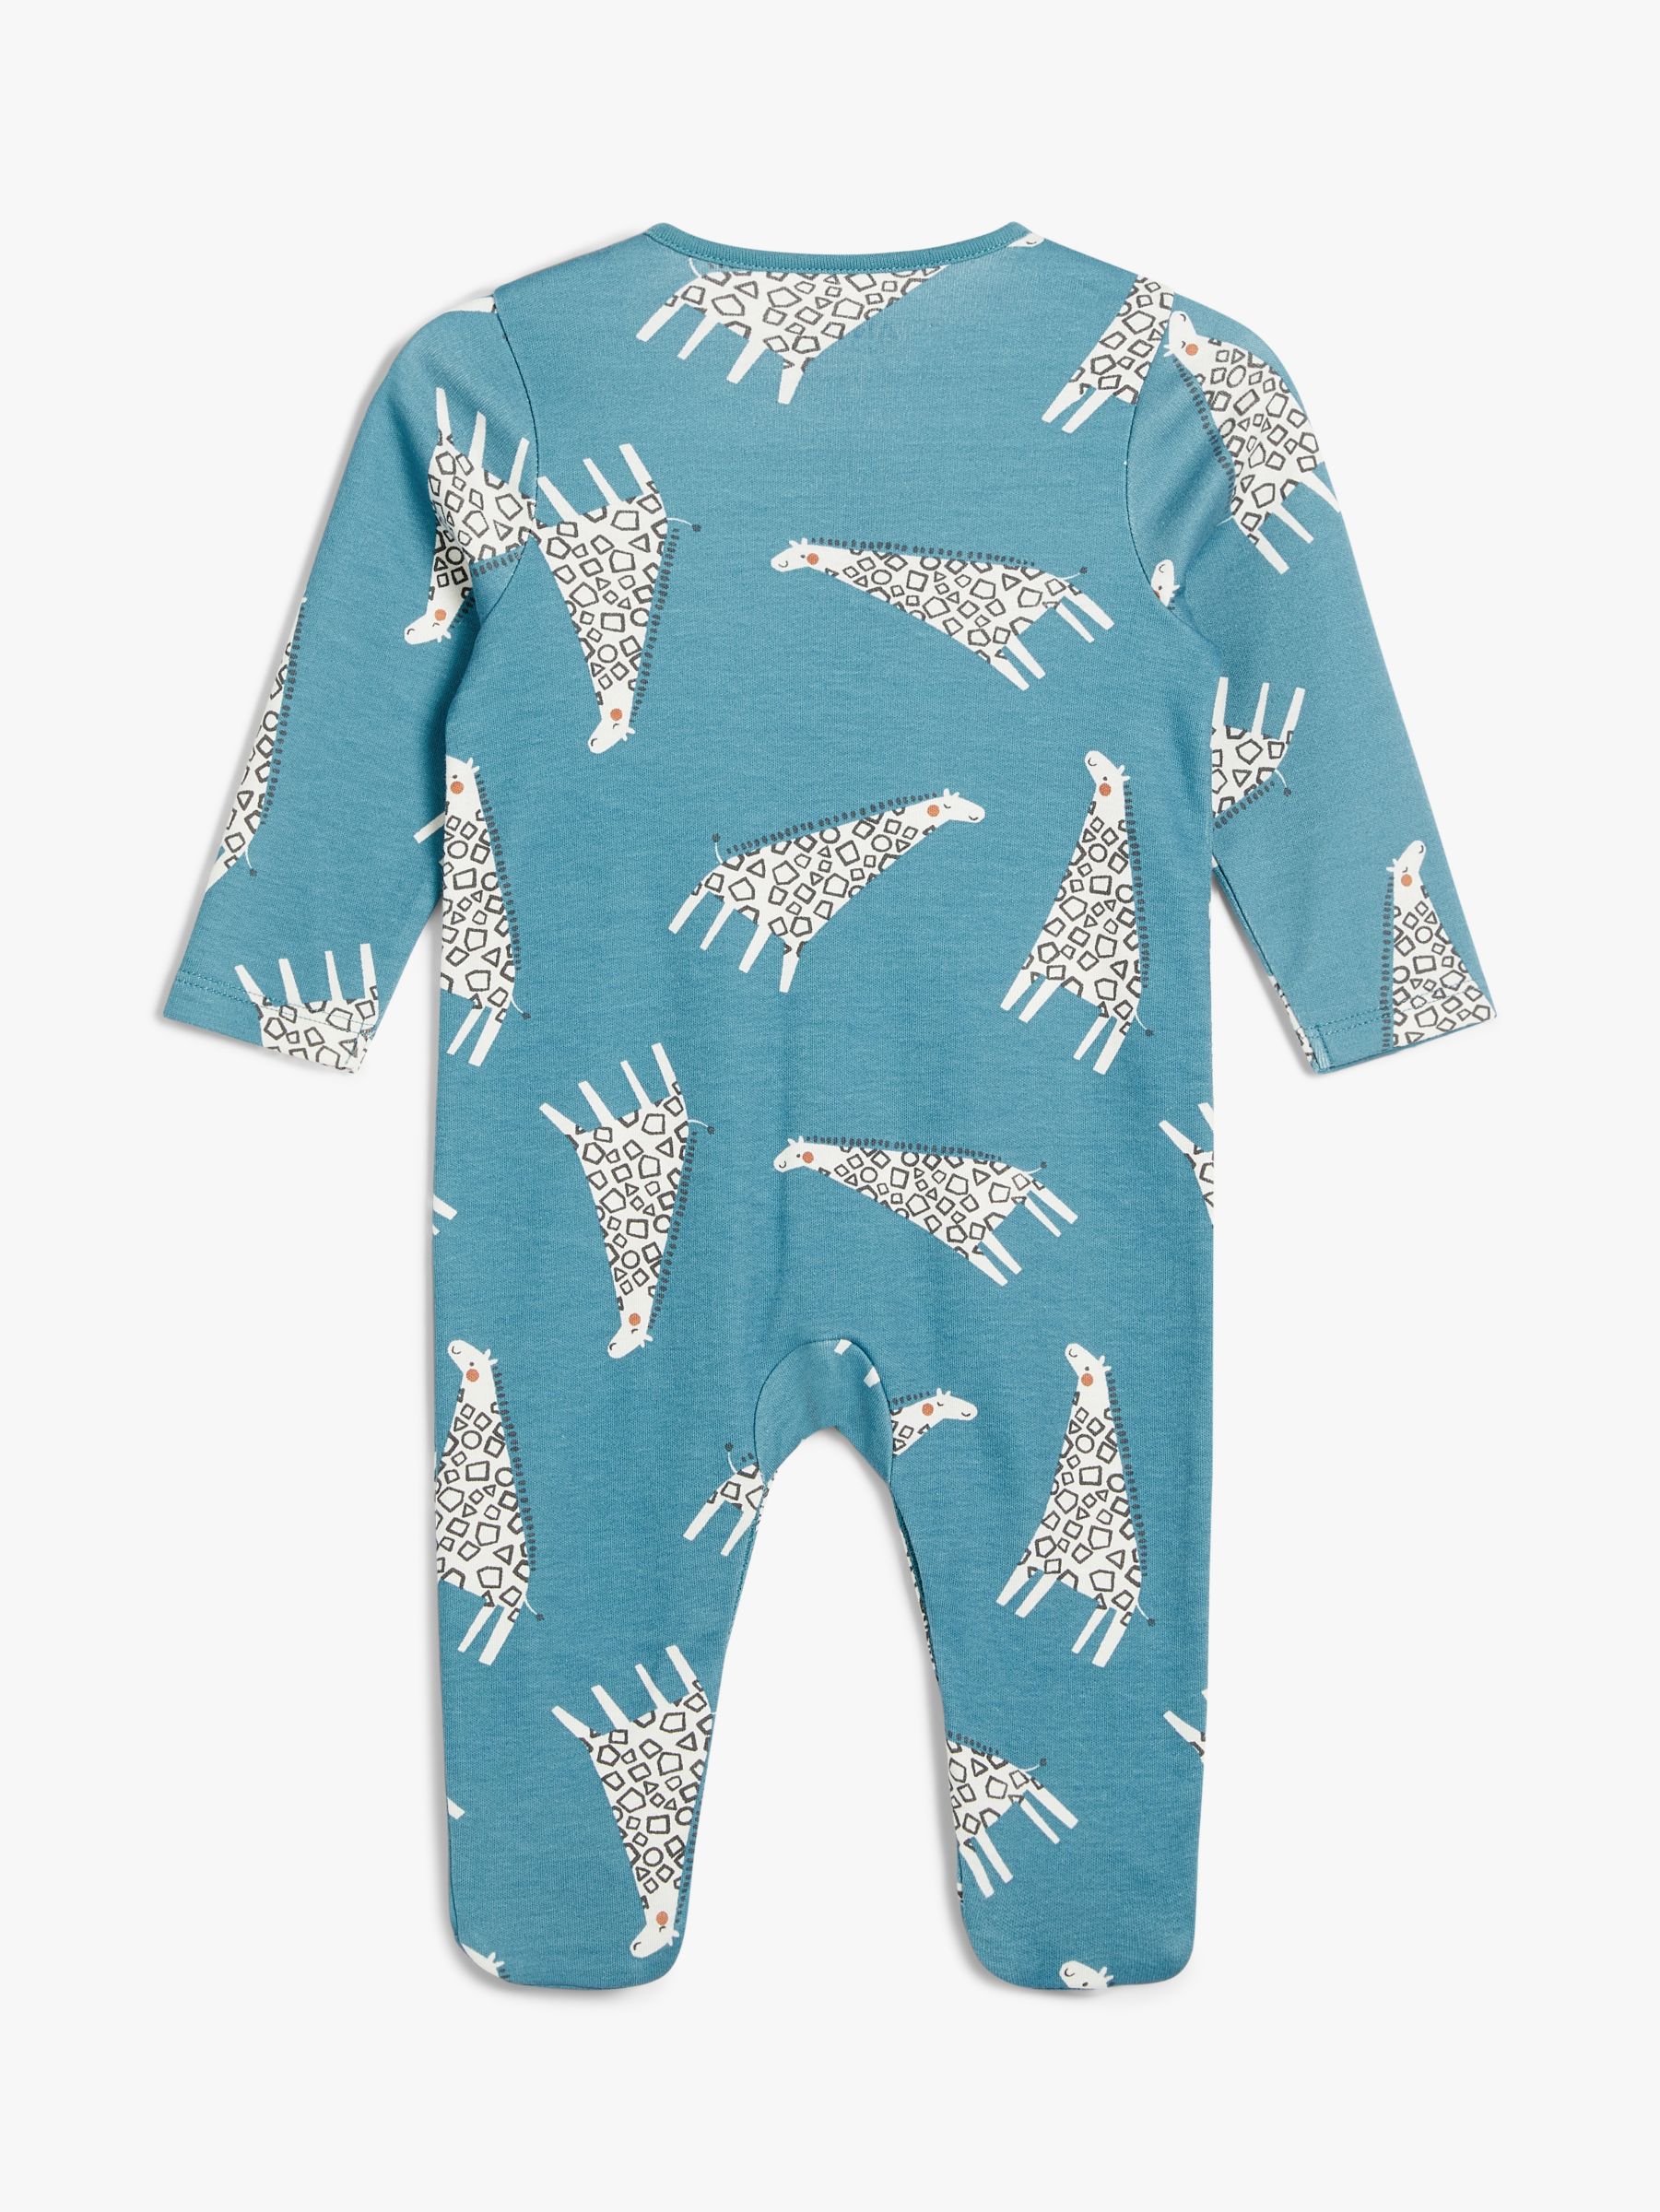 ANYDAY John Lewis & Partners Baby Giraffe Sleepsuit, Blue